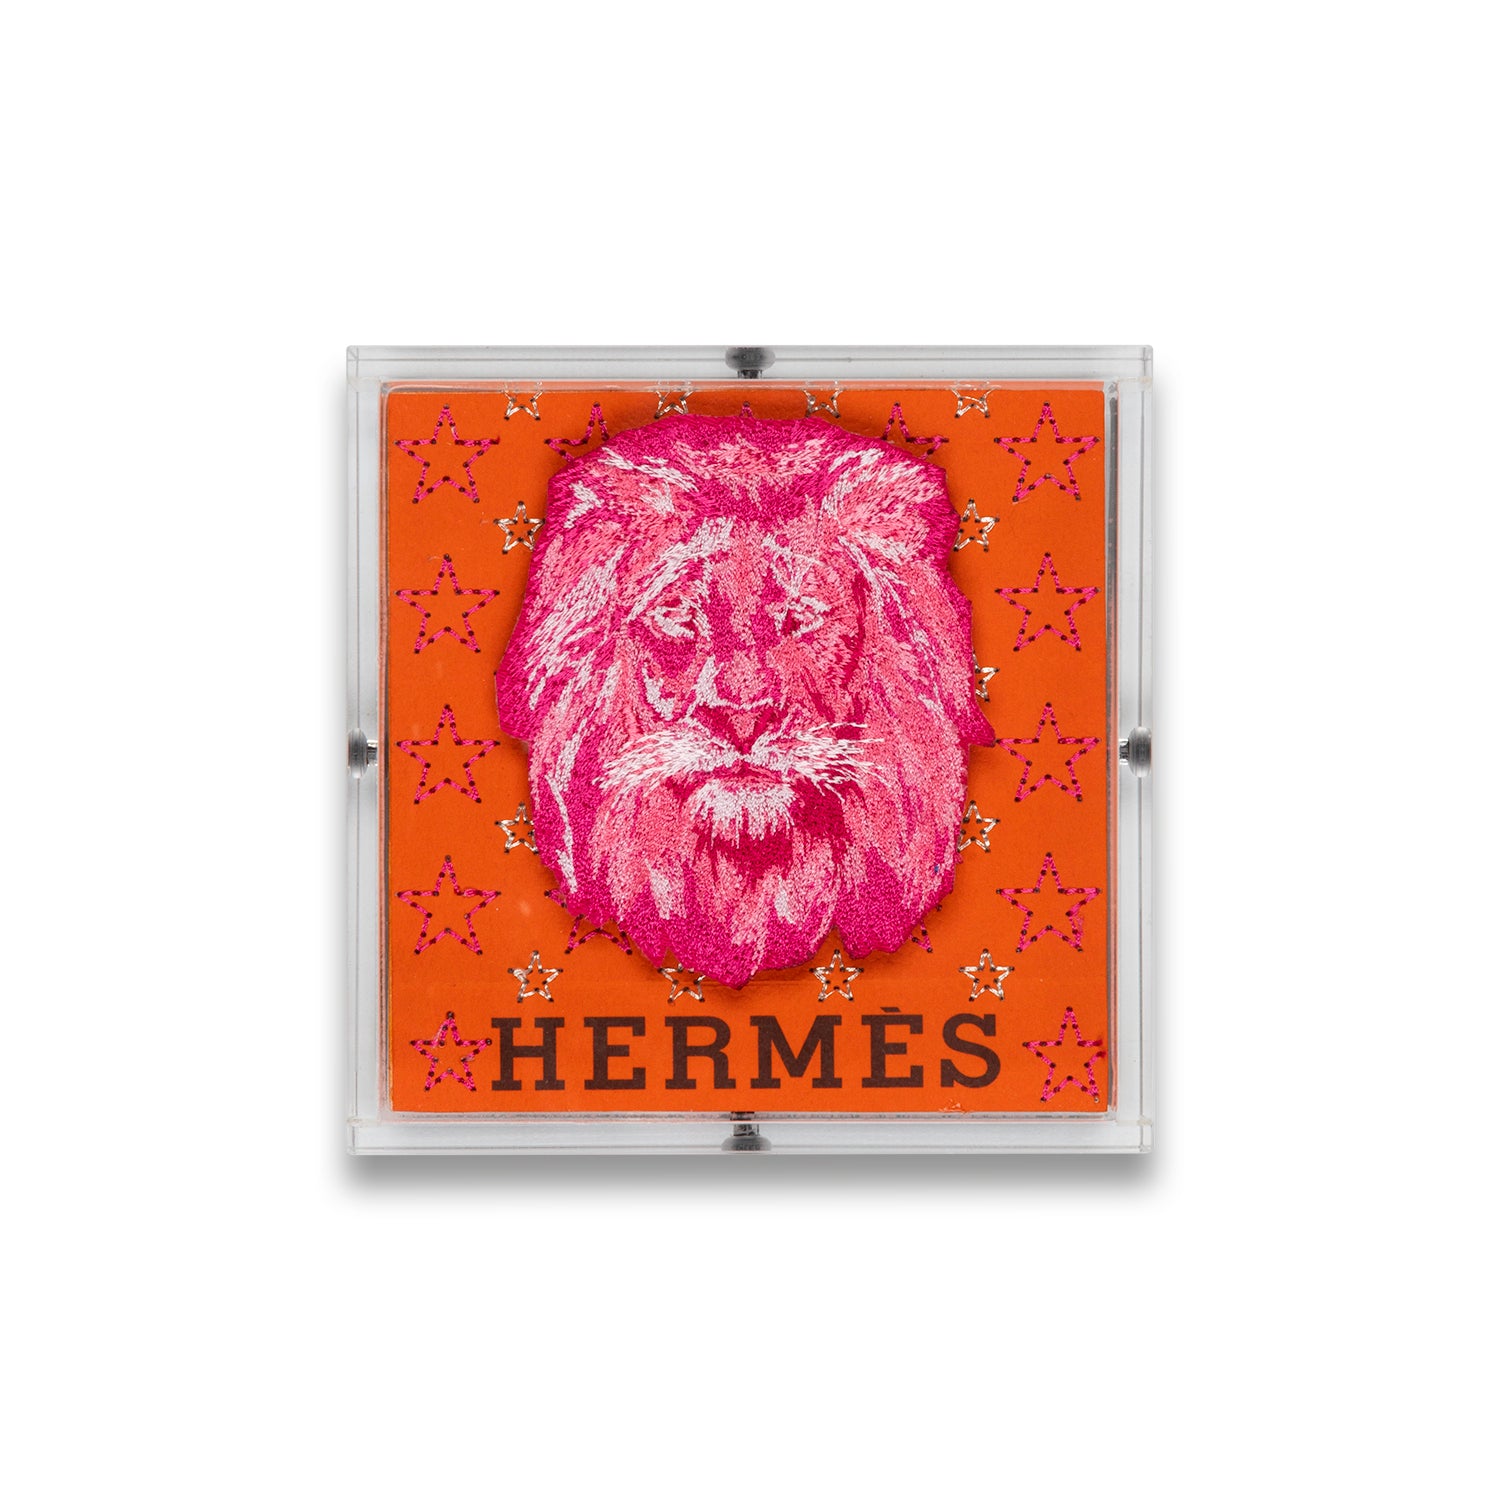 Petite Pink Hermes Strength by Stephen Wilson (5x5x2